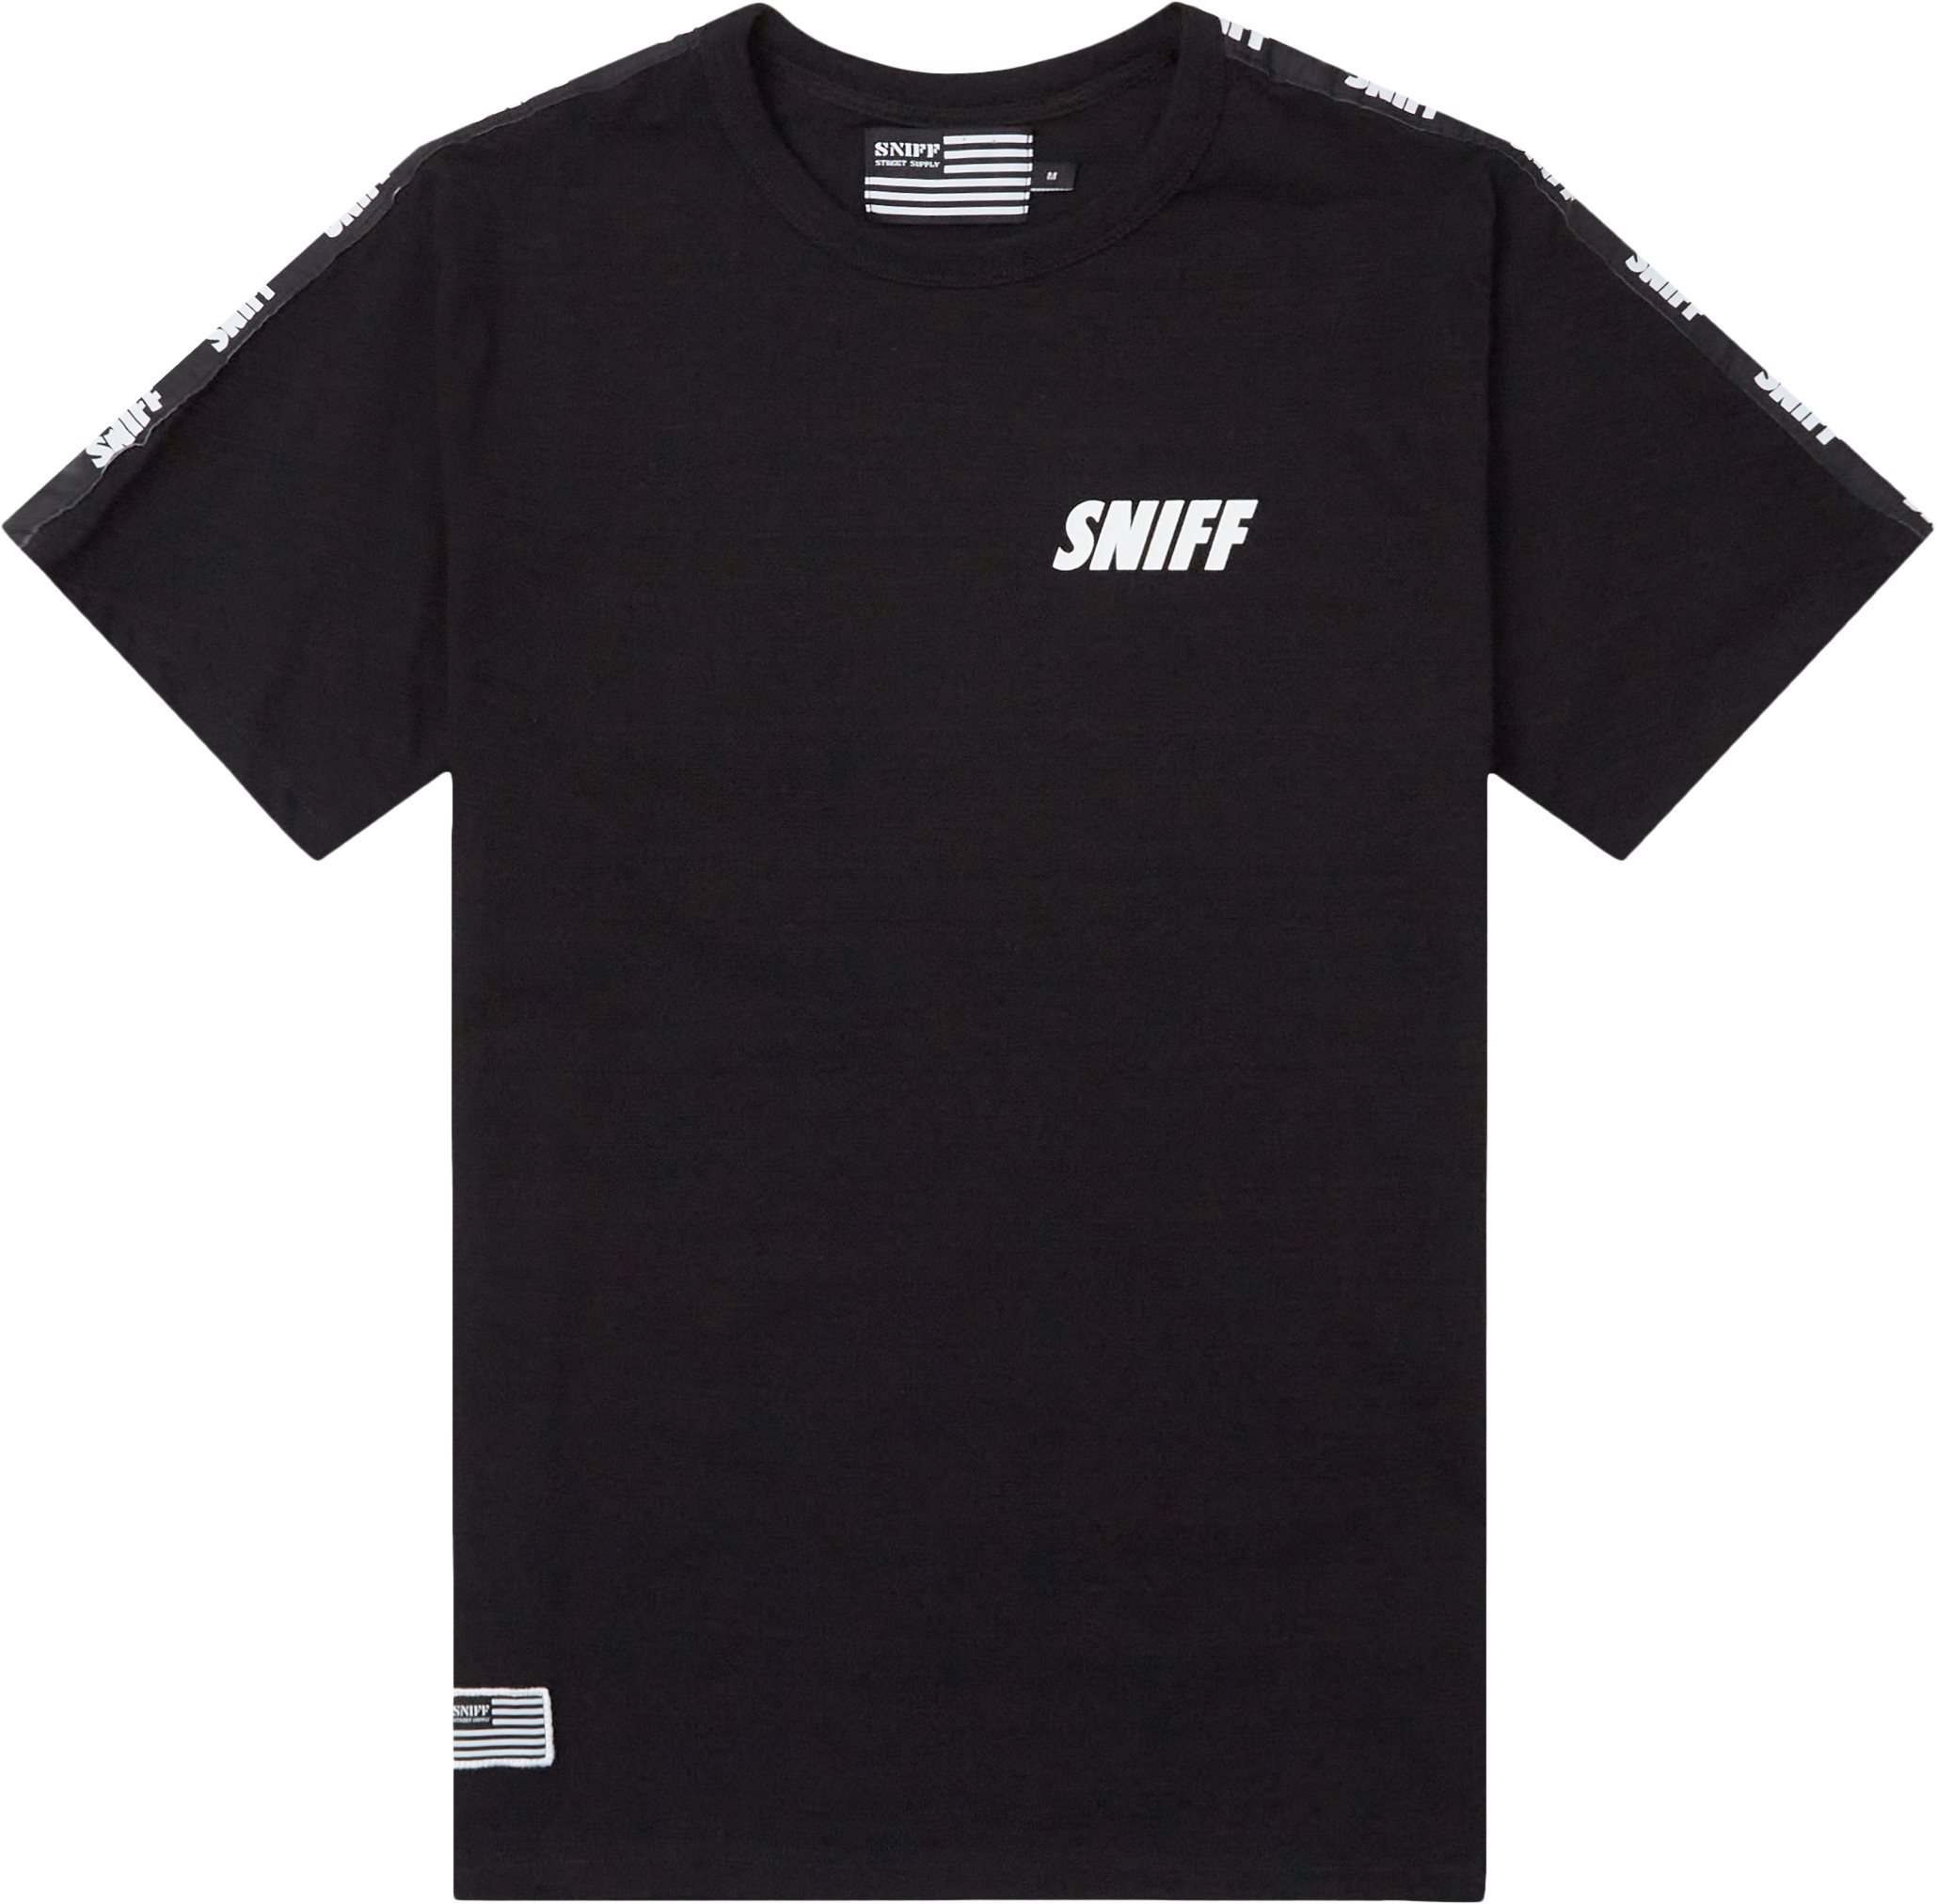 Pointe Tee - T-shirts - Regular fit - Black